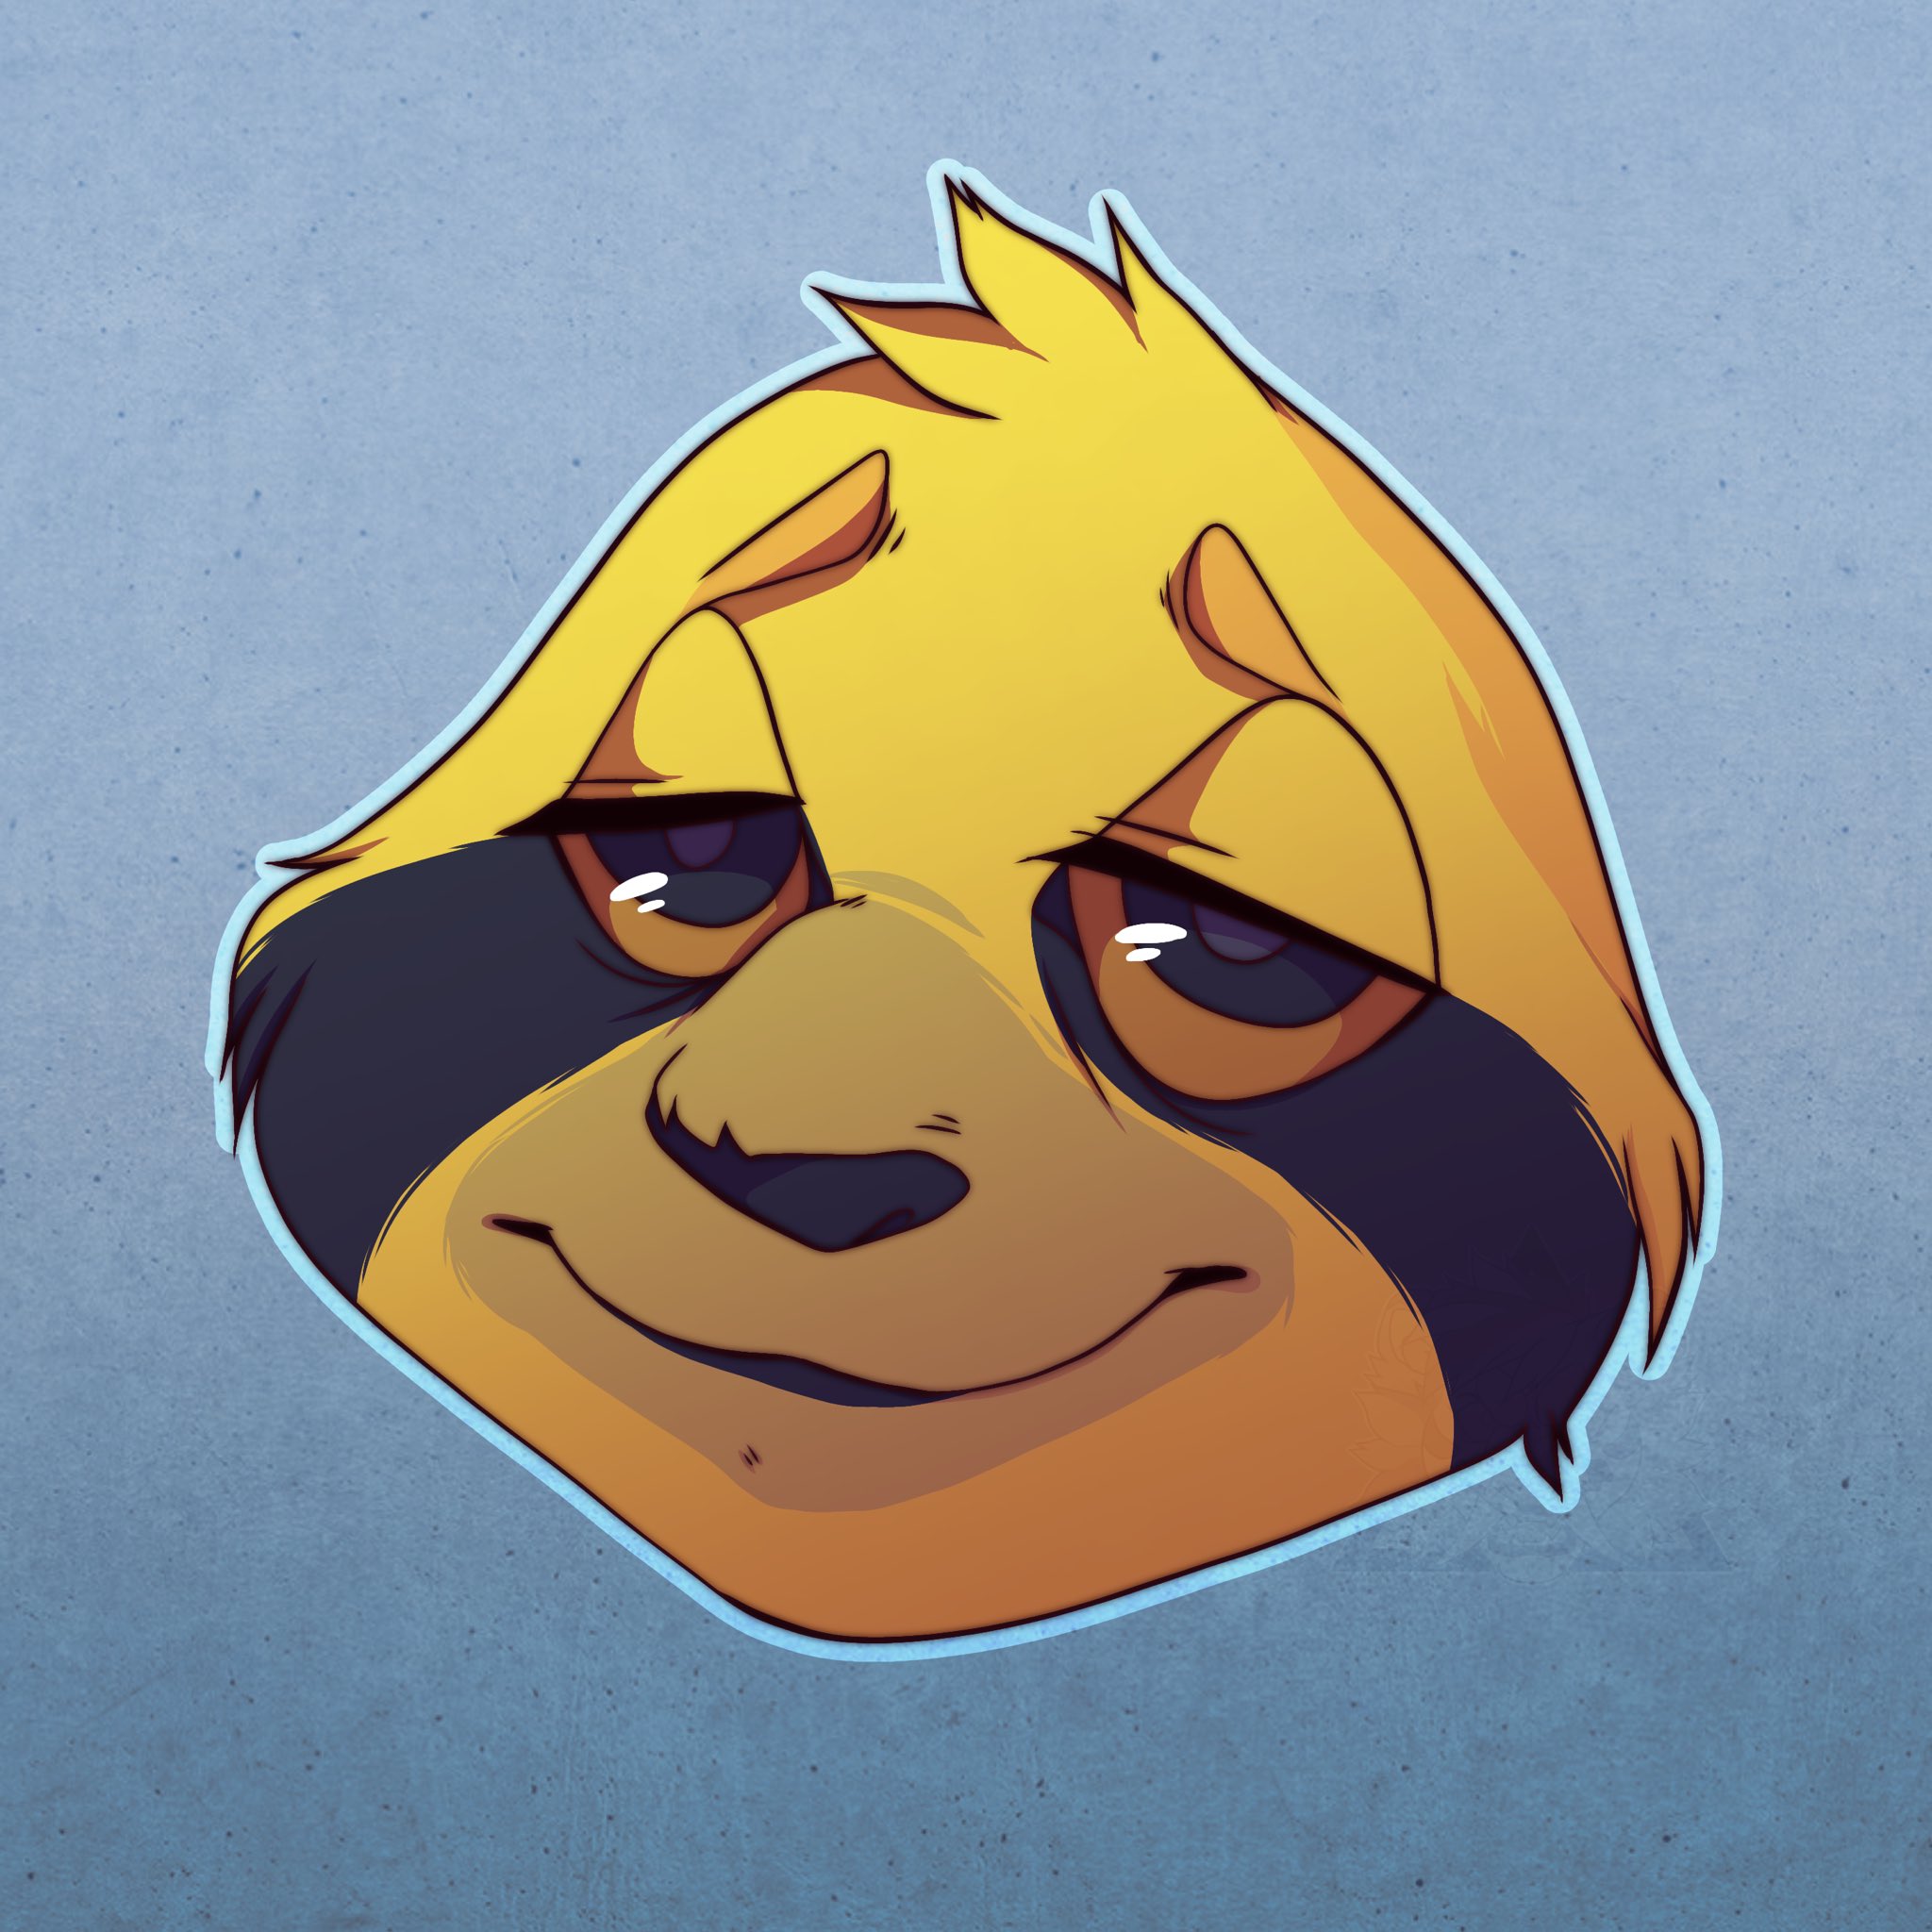 Armored_Sloth's avatar